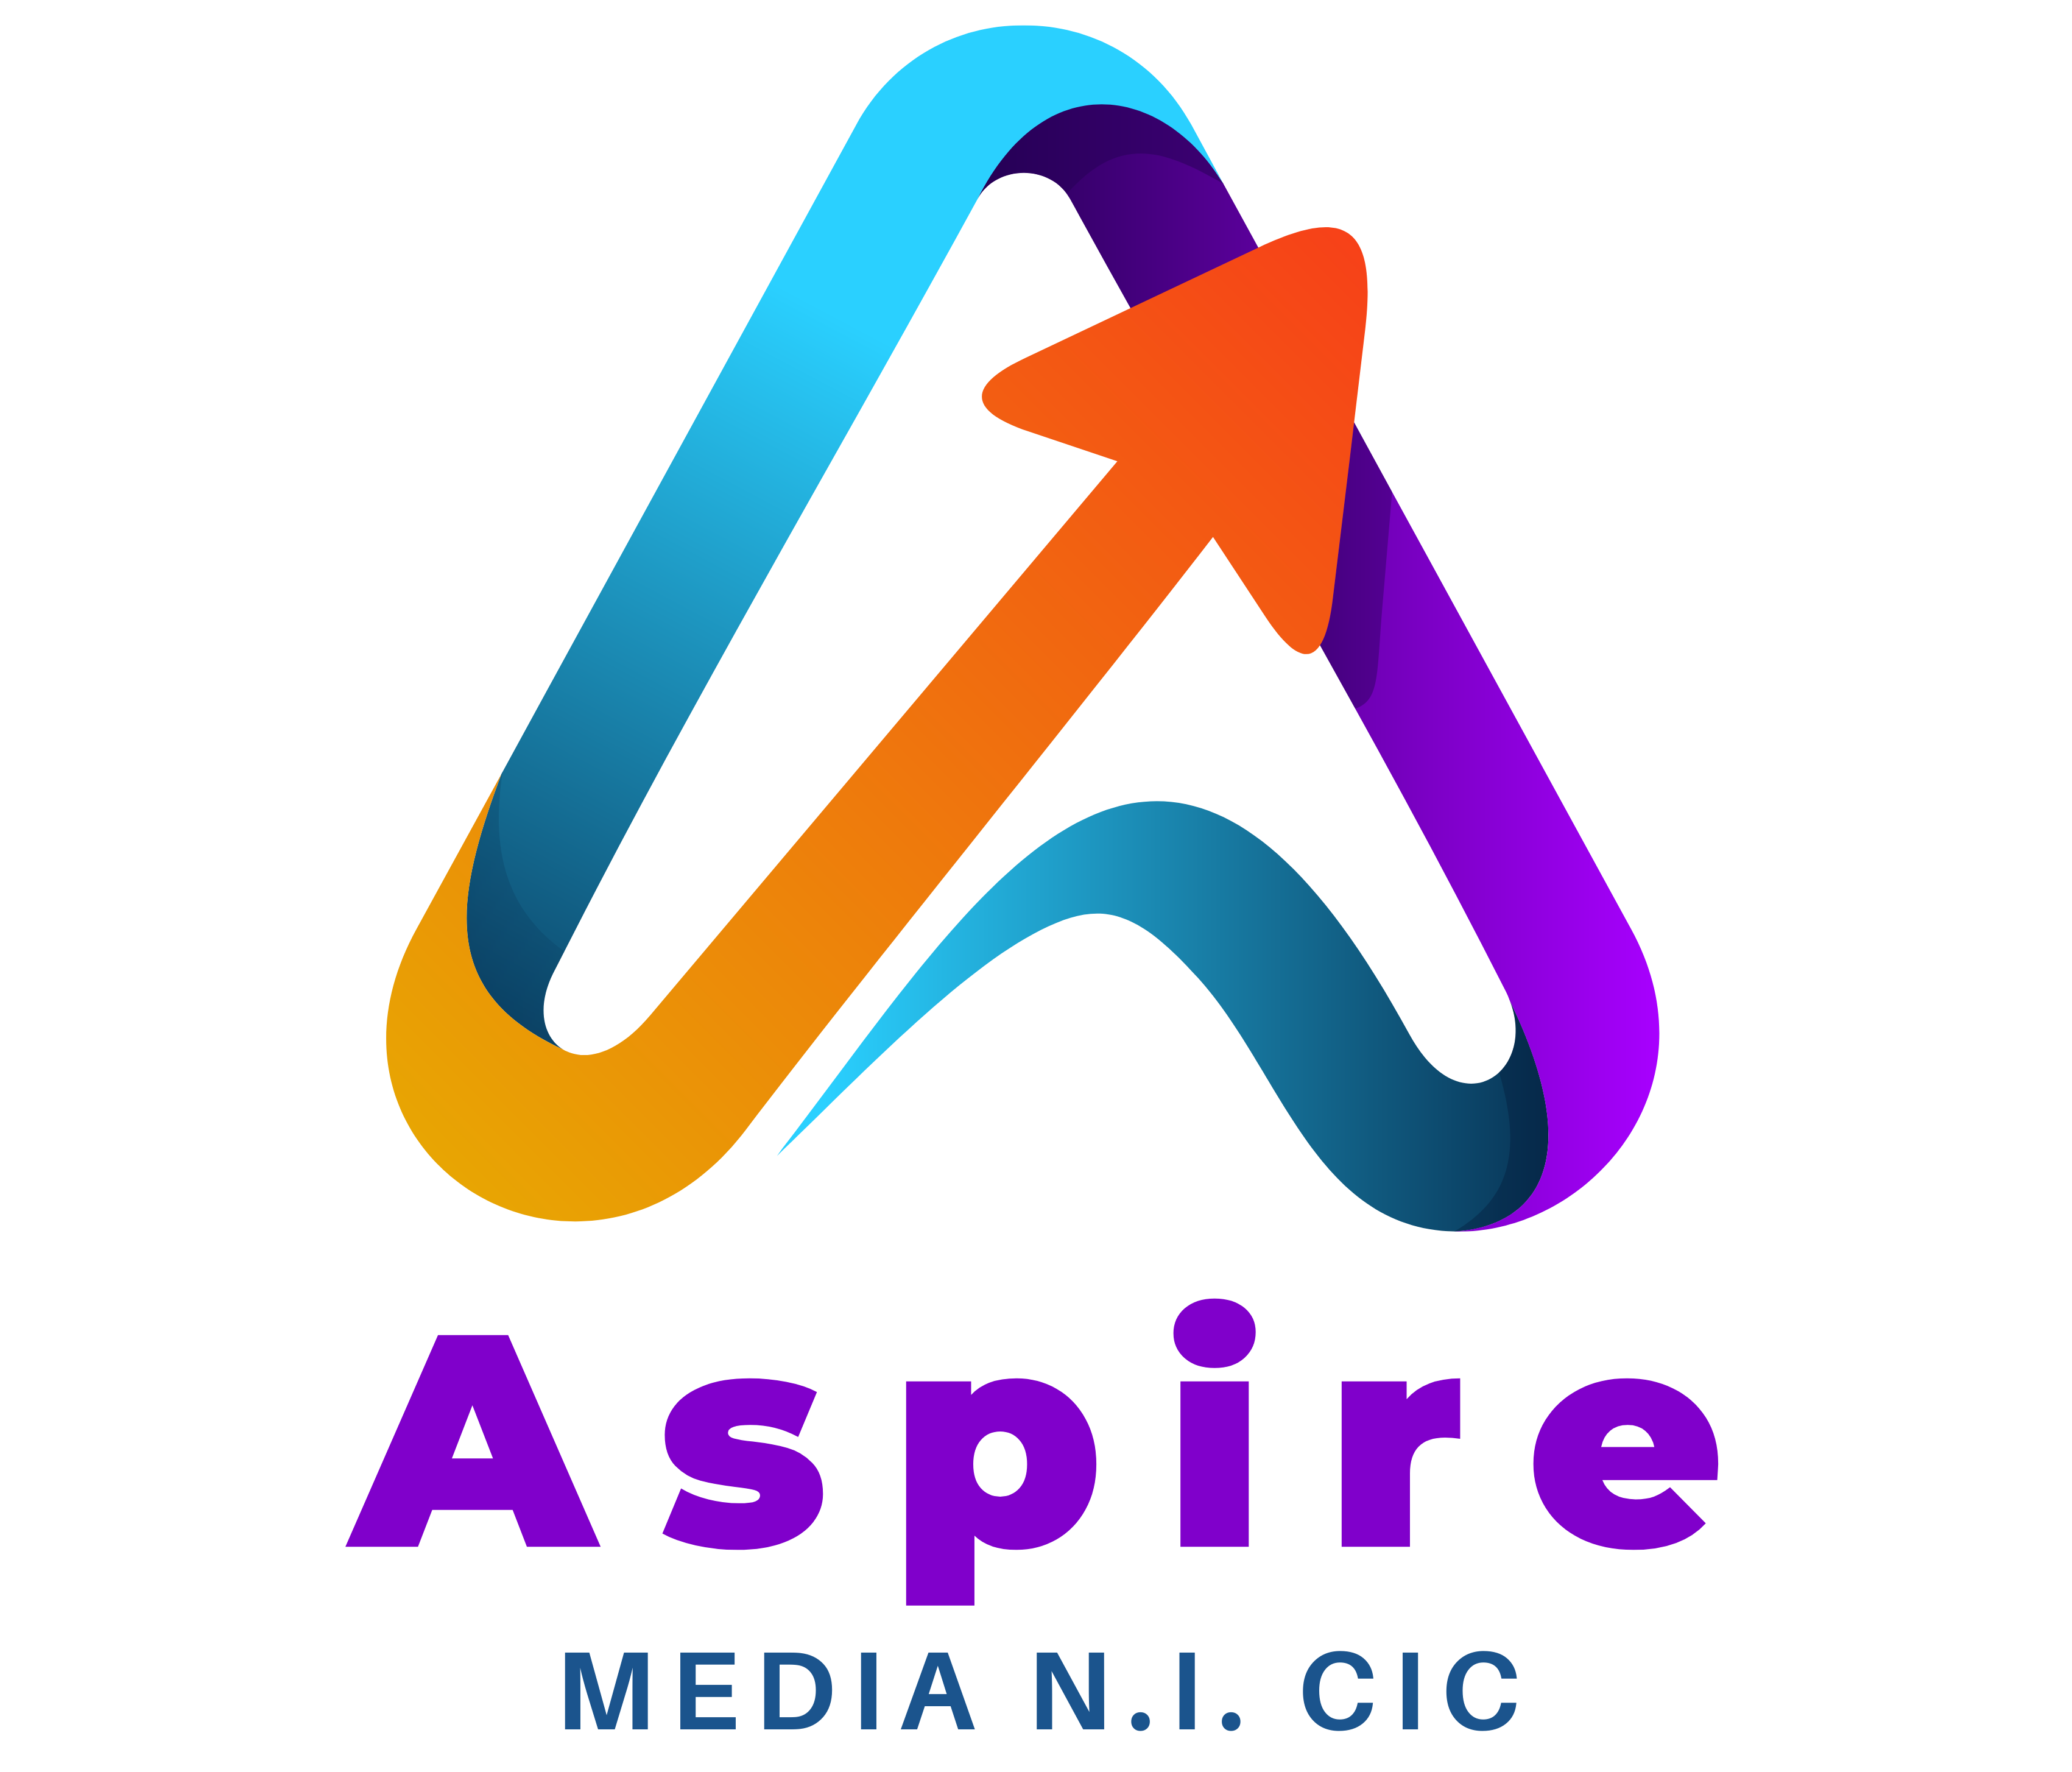 Aspire Media N.I. CIC